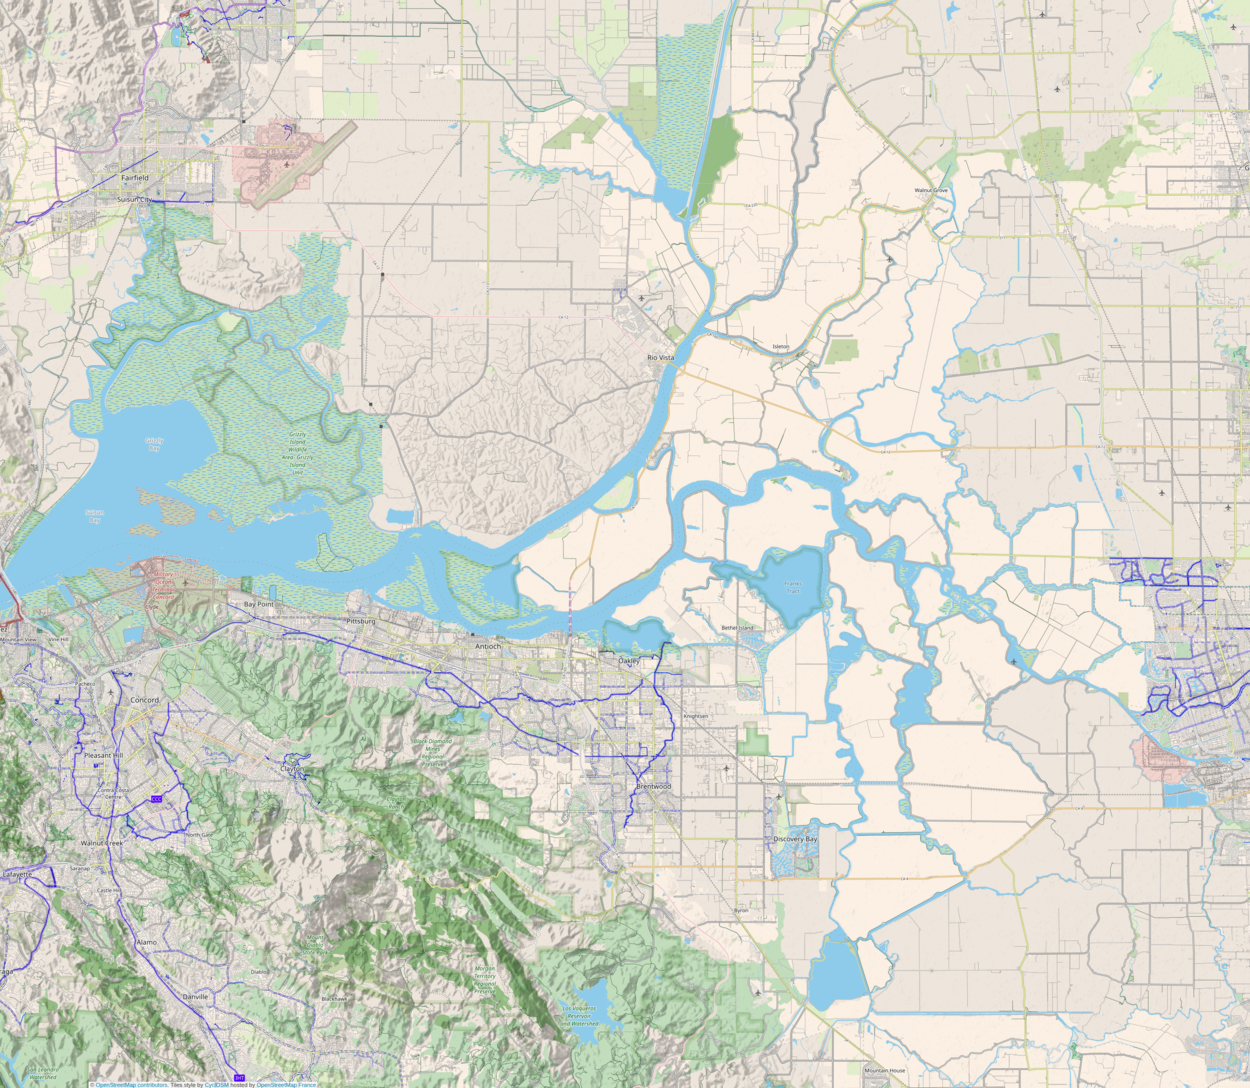 Hastings Tract is located in Sacramento-San Joaquin River Delta